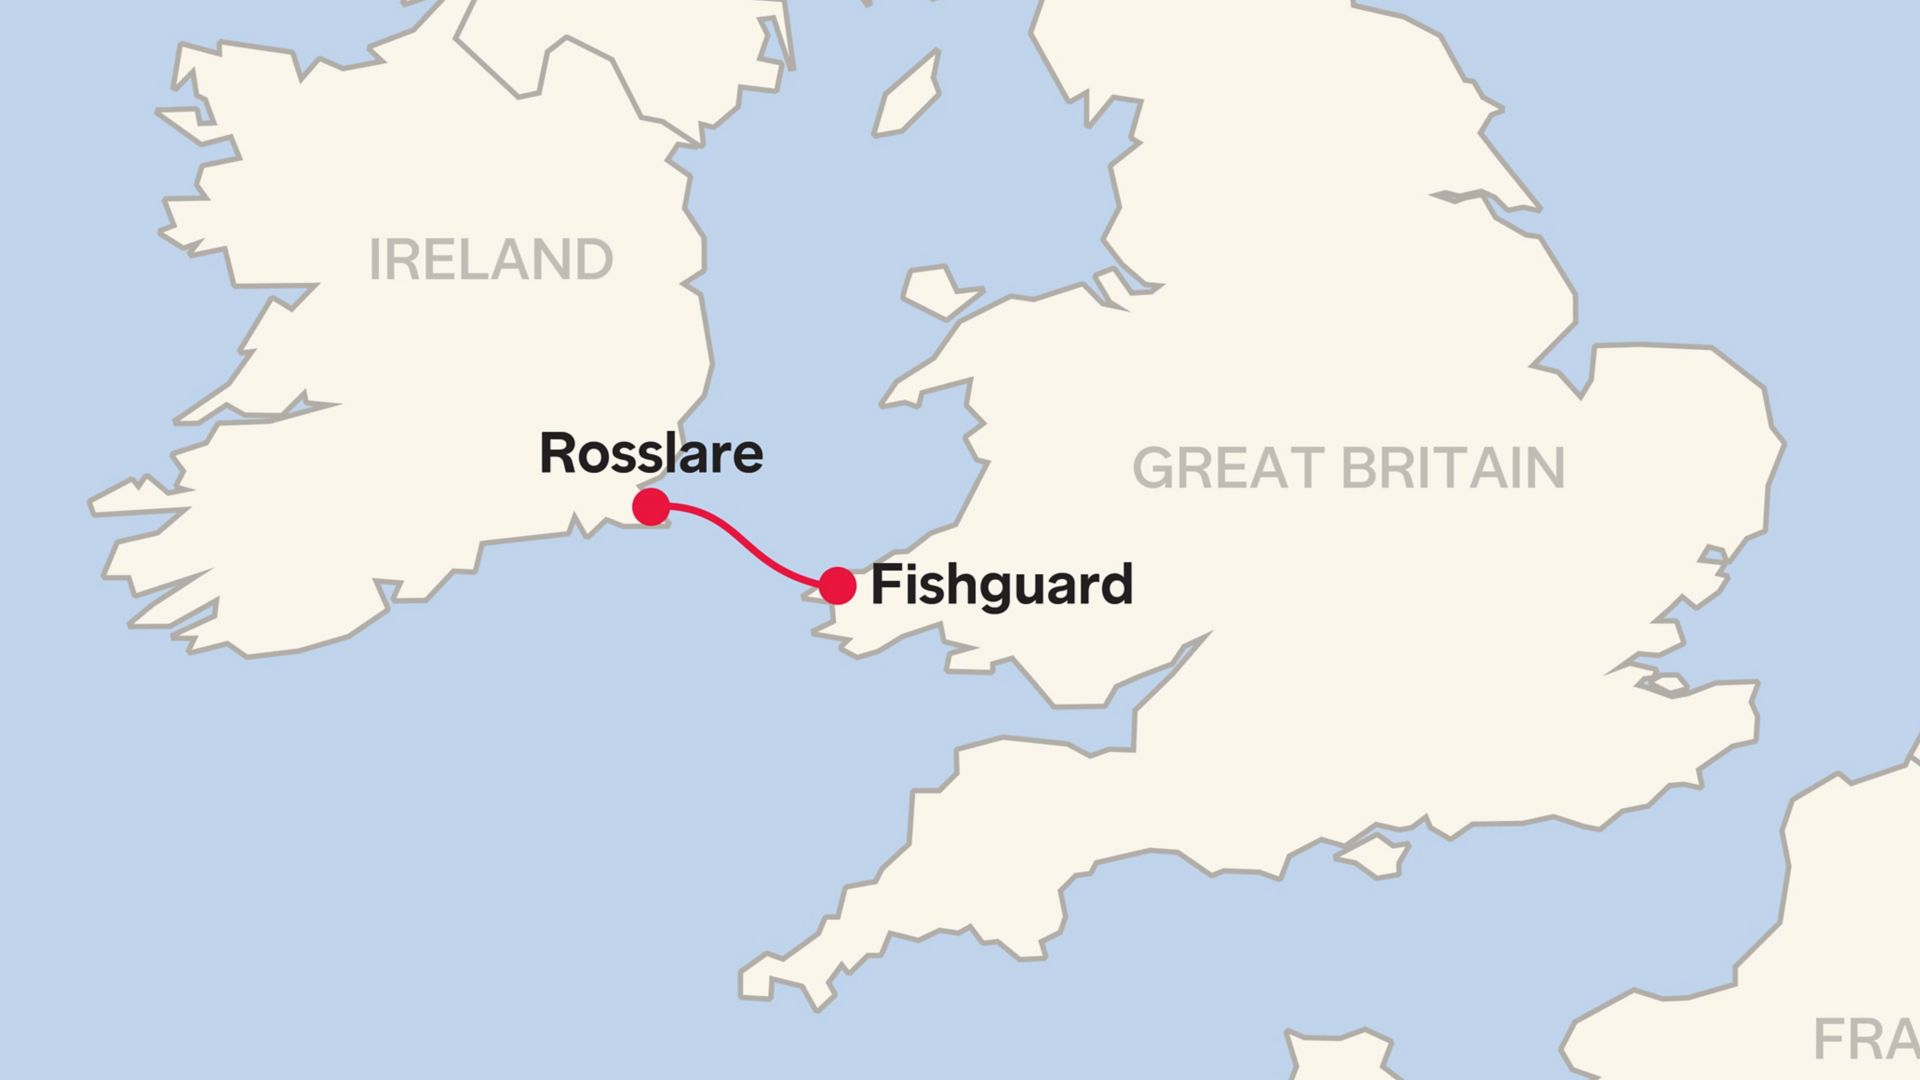 Routemap Rosslare - Fishguard